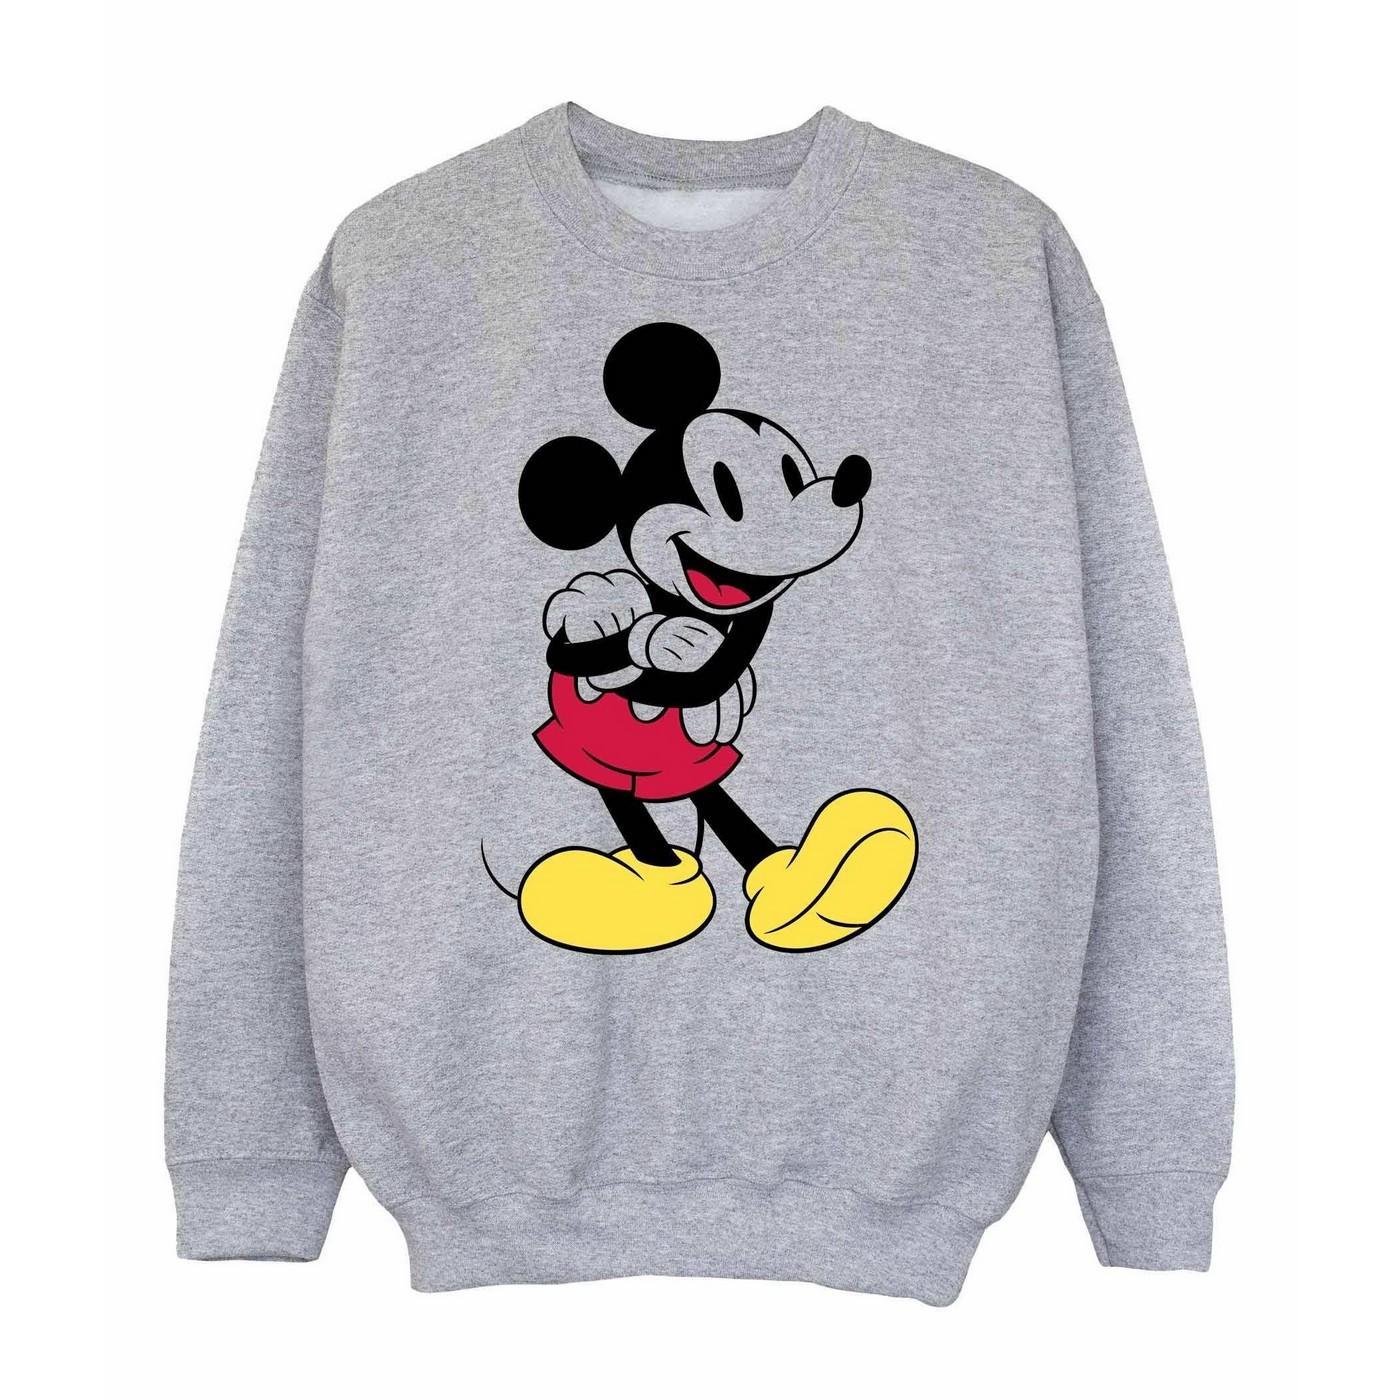 Disney Girls Classic Mickey Mouse Sweatshirt (Sports Grey) (5-6 Years)